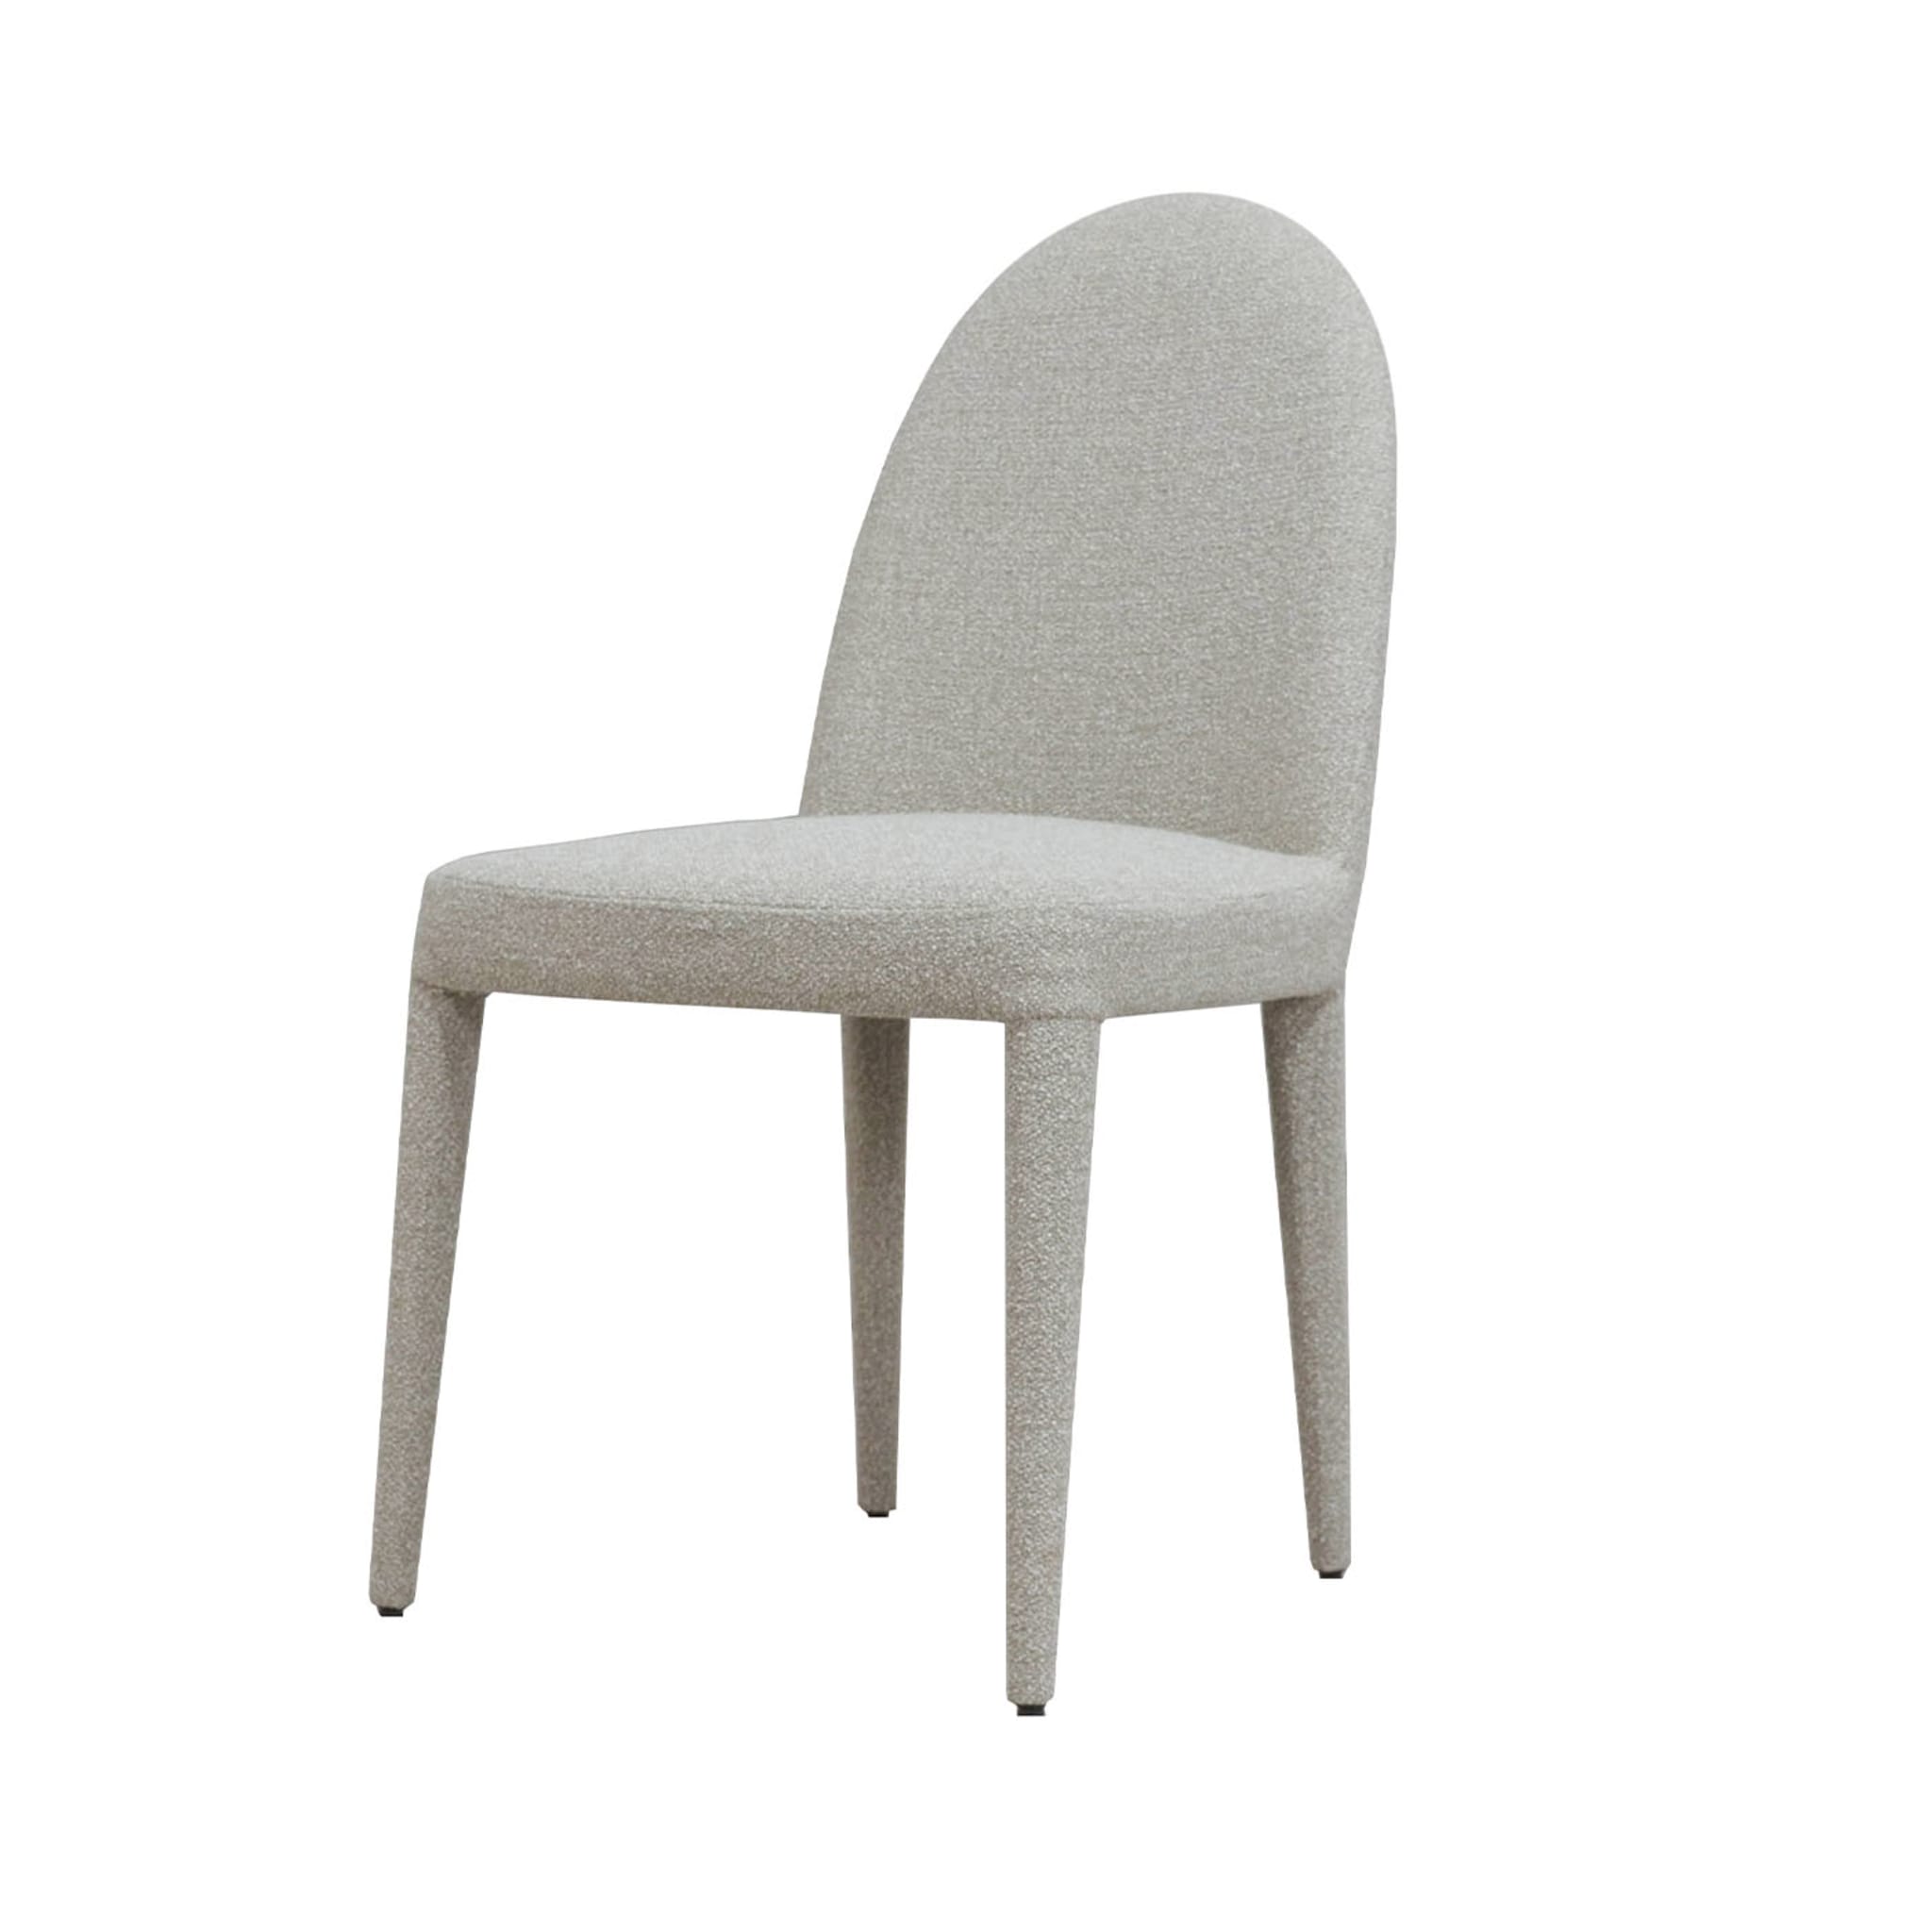  Balzaretti XL  Dining Chair in Torri Lana Boemian Fabric - Alternative view 1